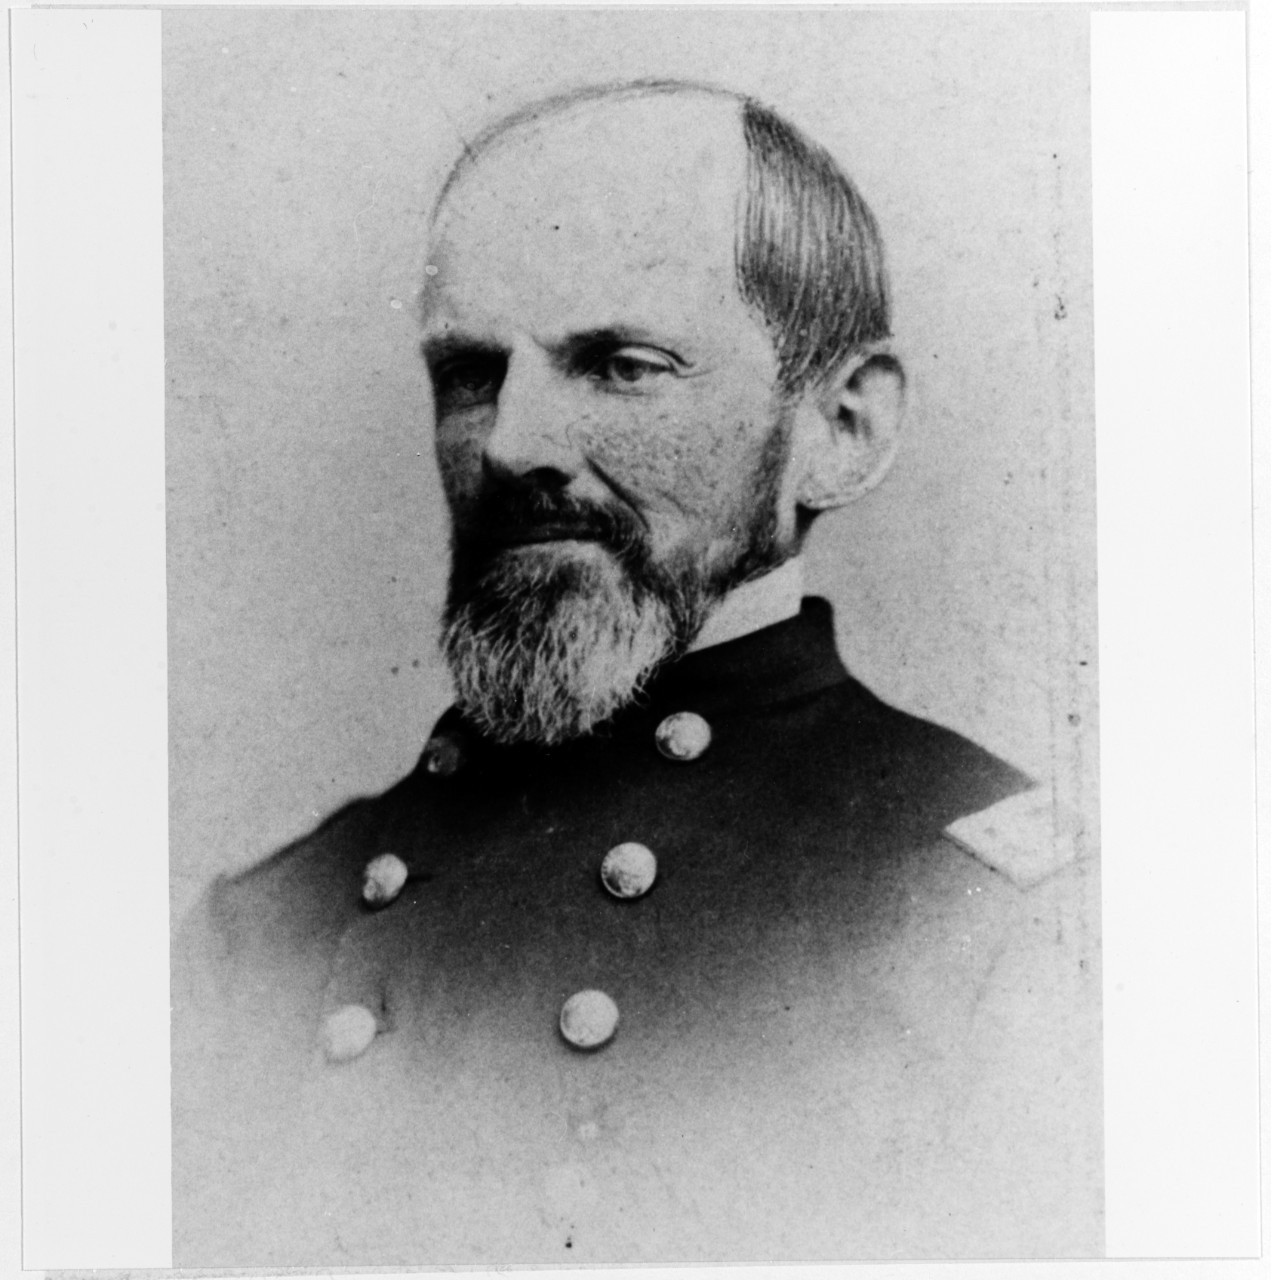 Colonel James H. Jones, US Marine Corps